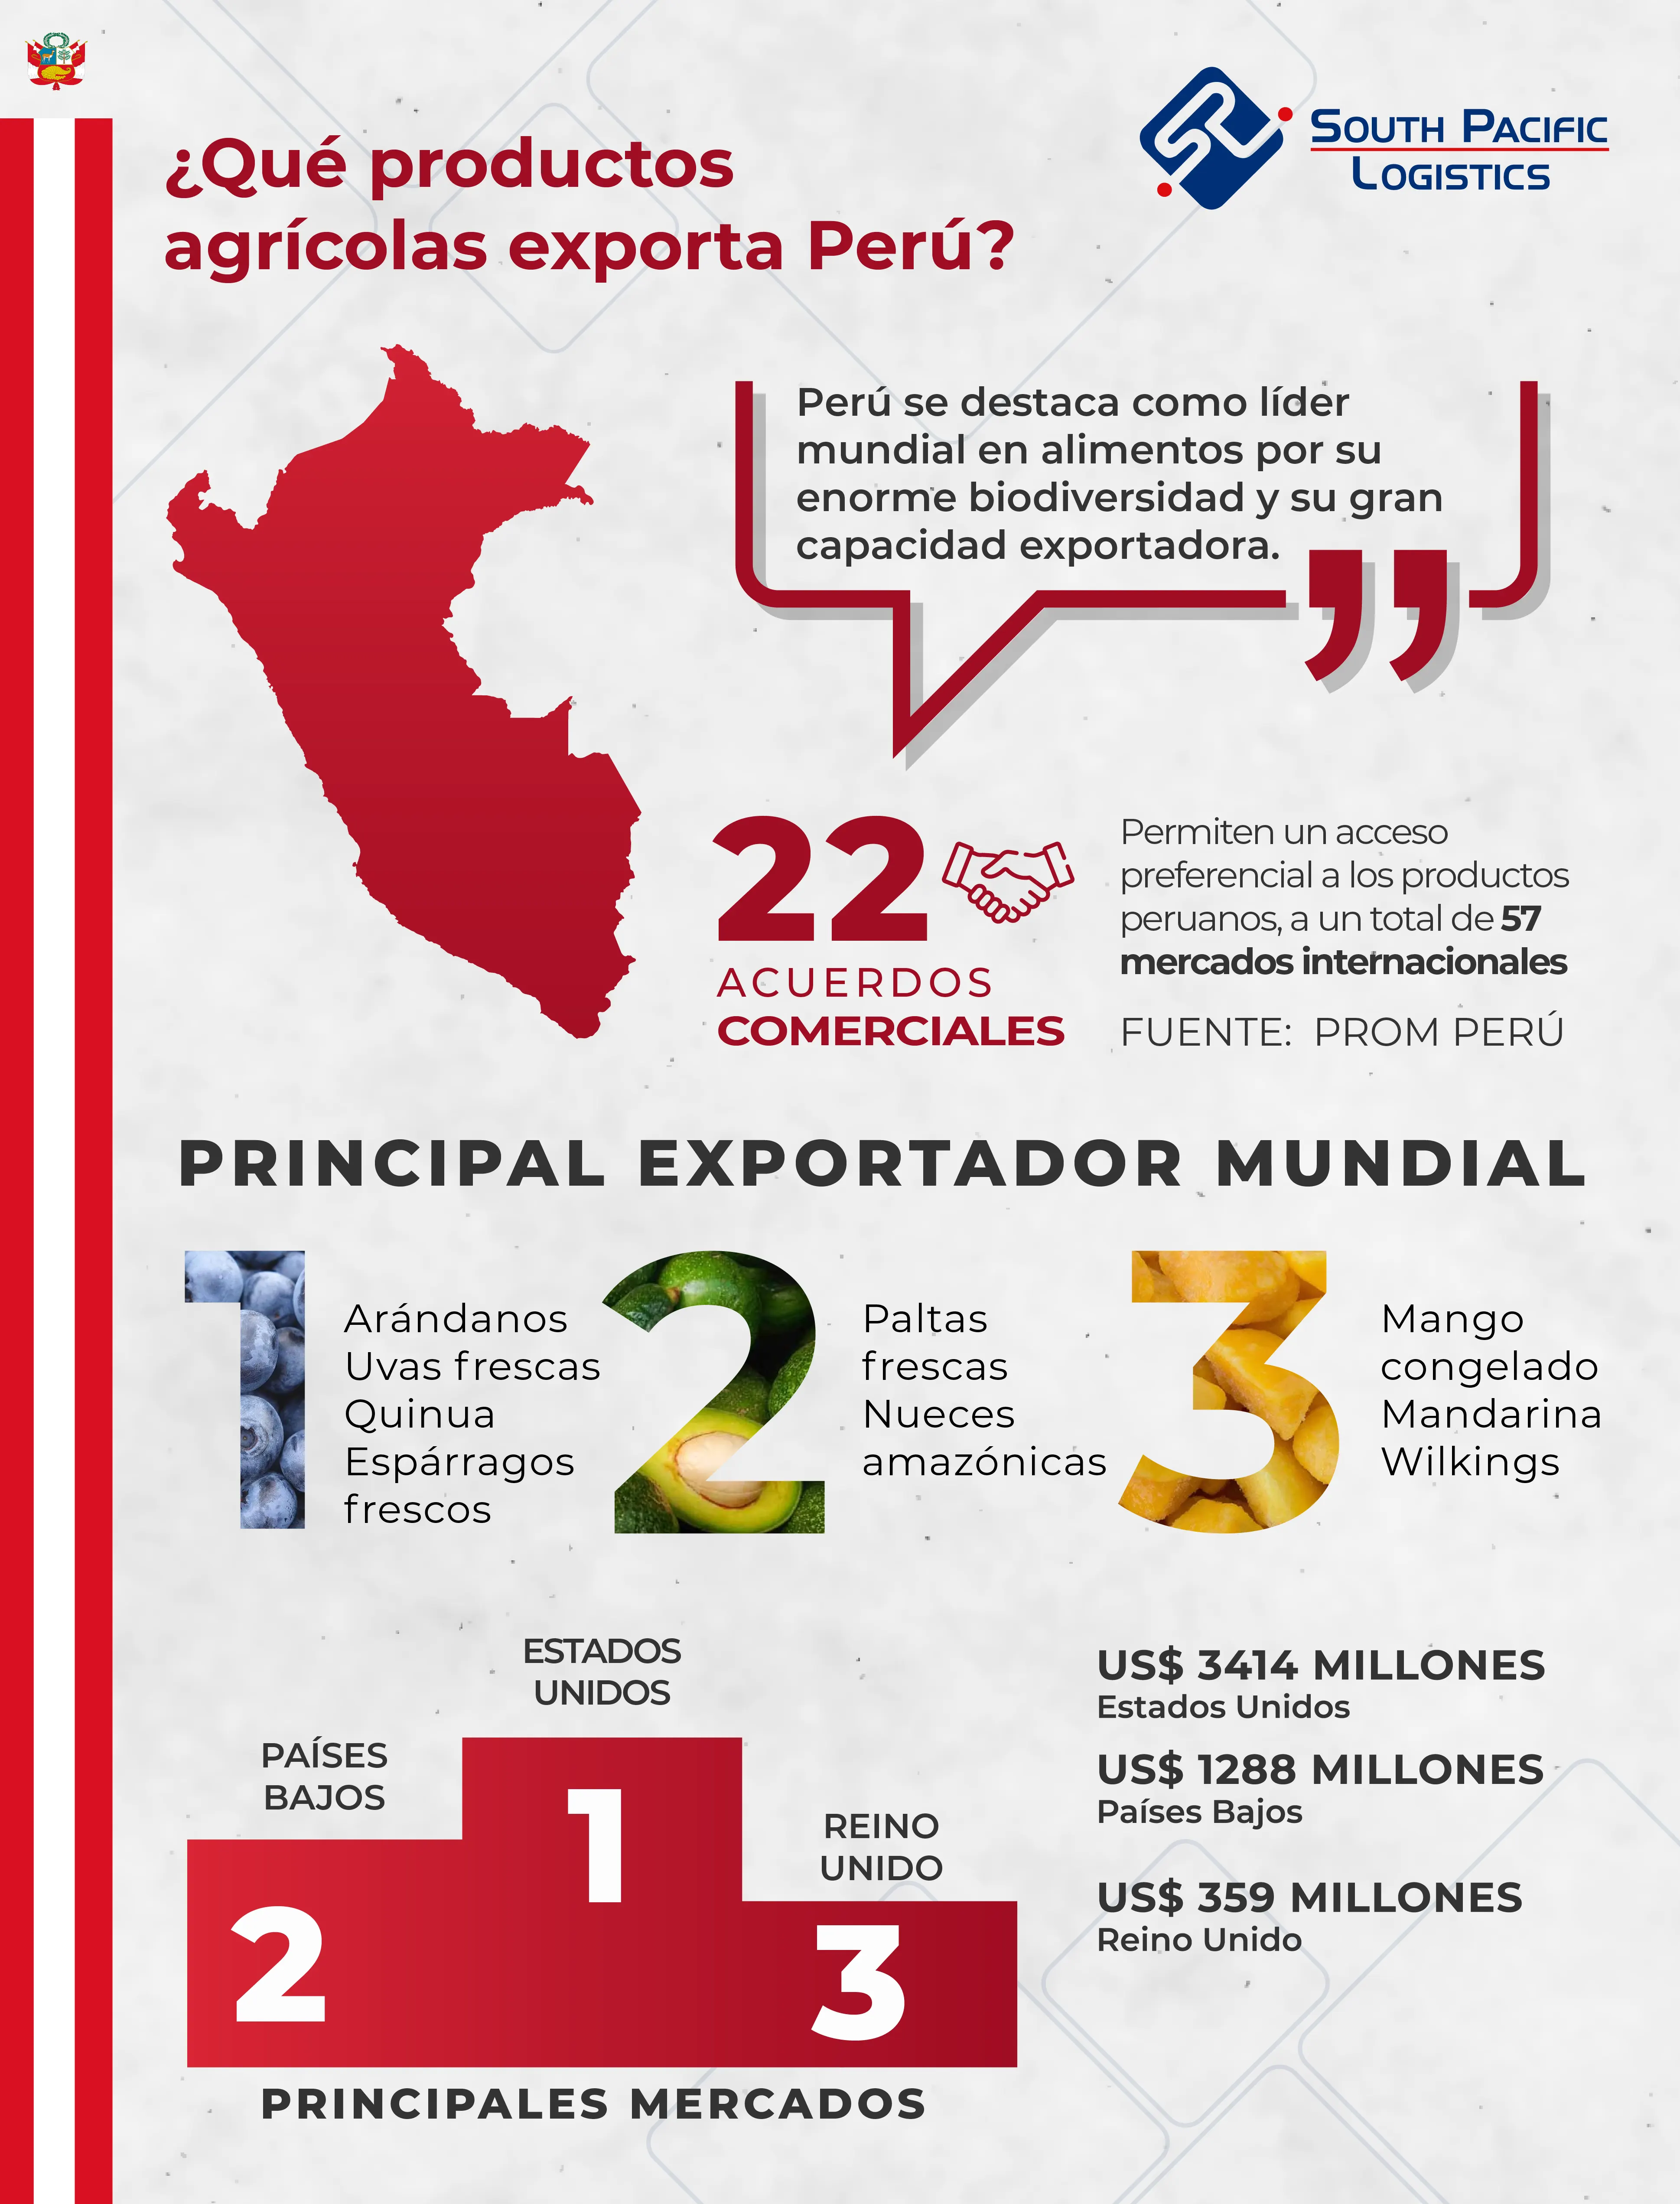 Infografia sobre productos agricolas que exporta Peru